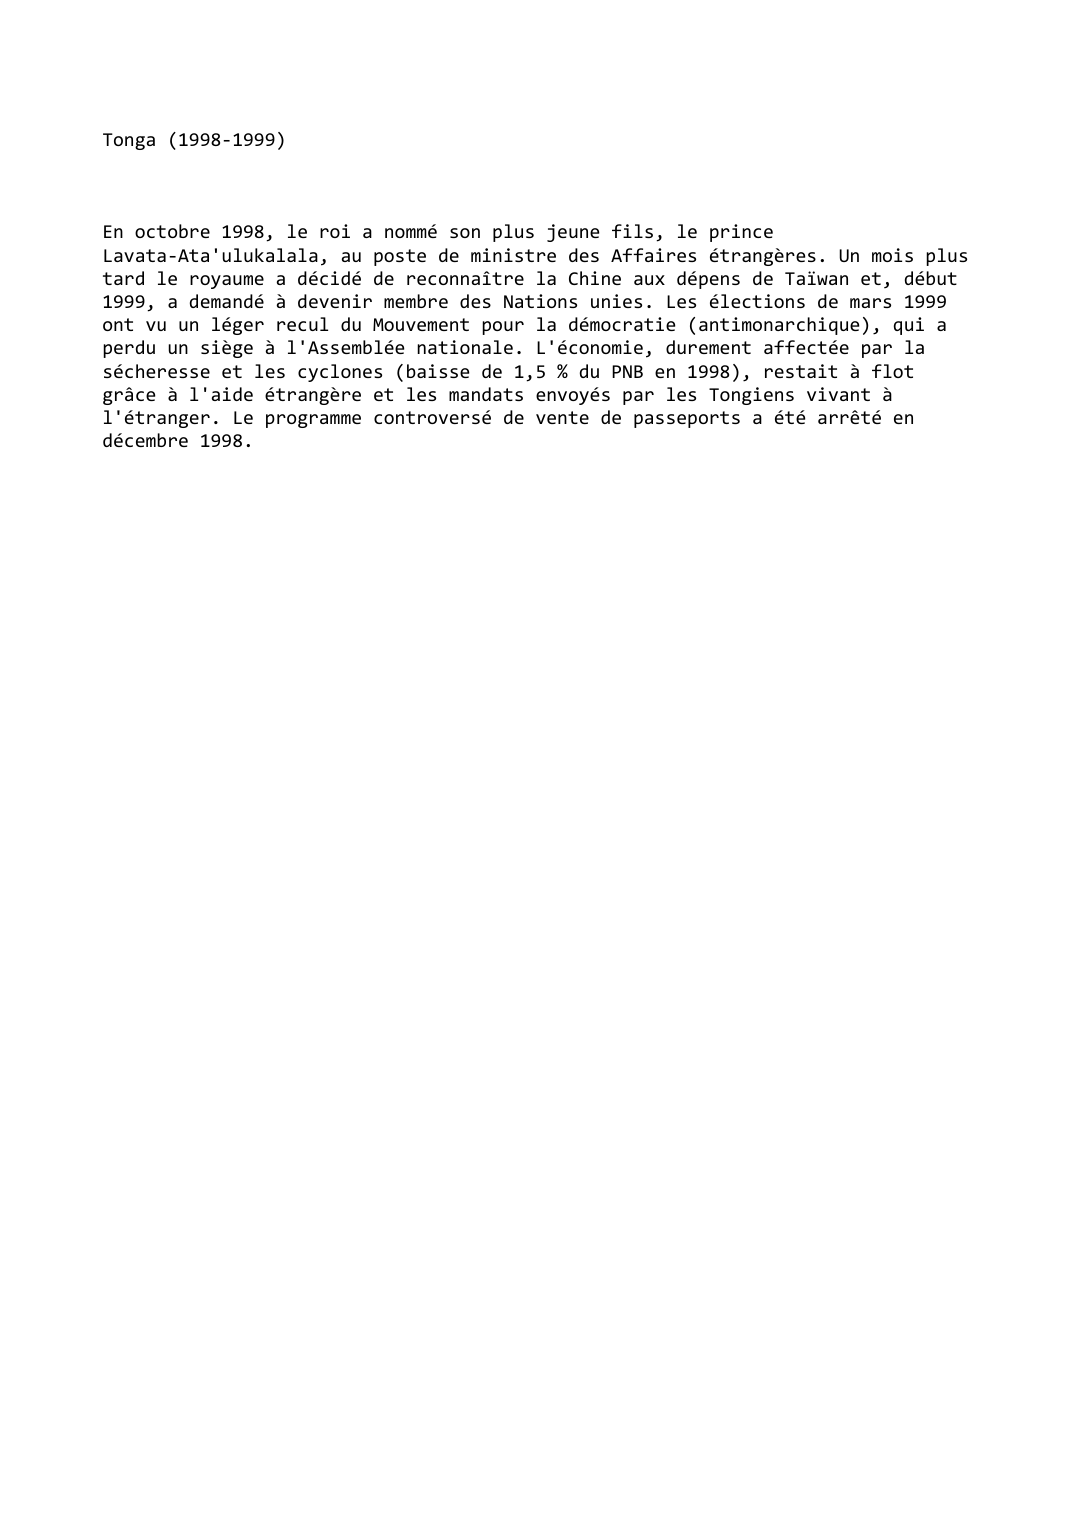 Prévisualisation du document Tonga (1998-1999)